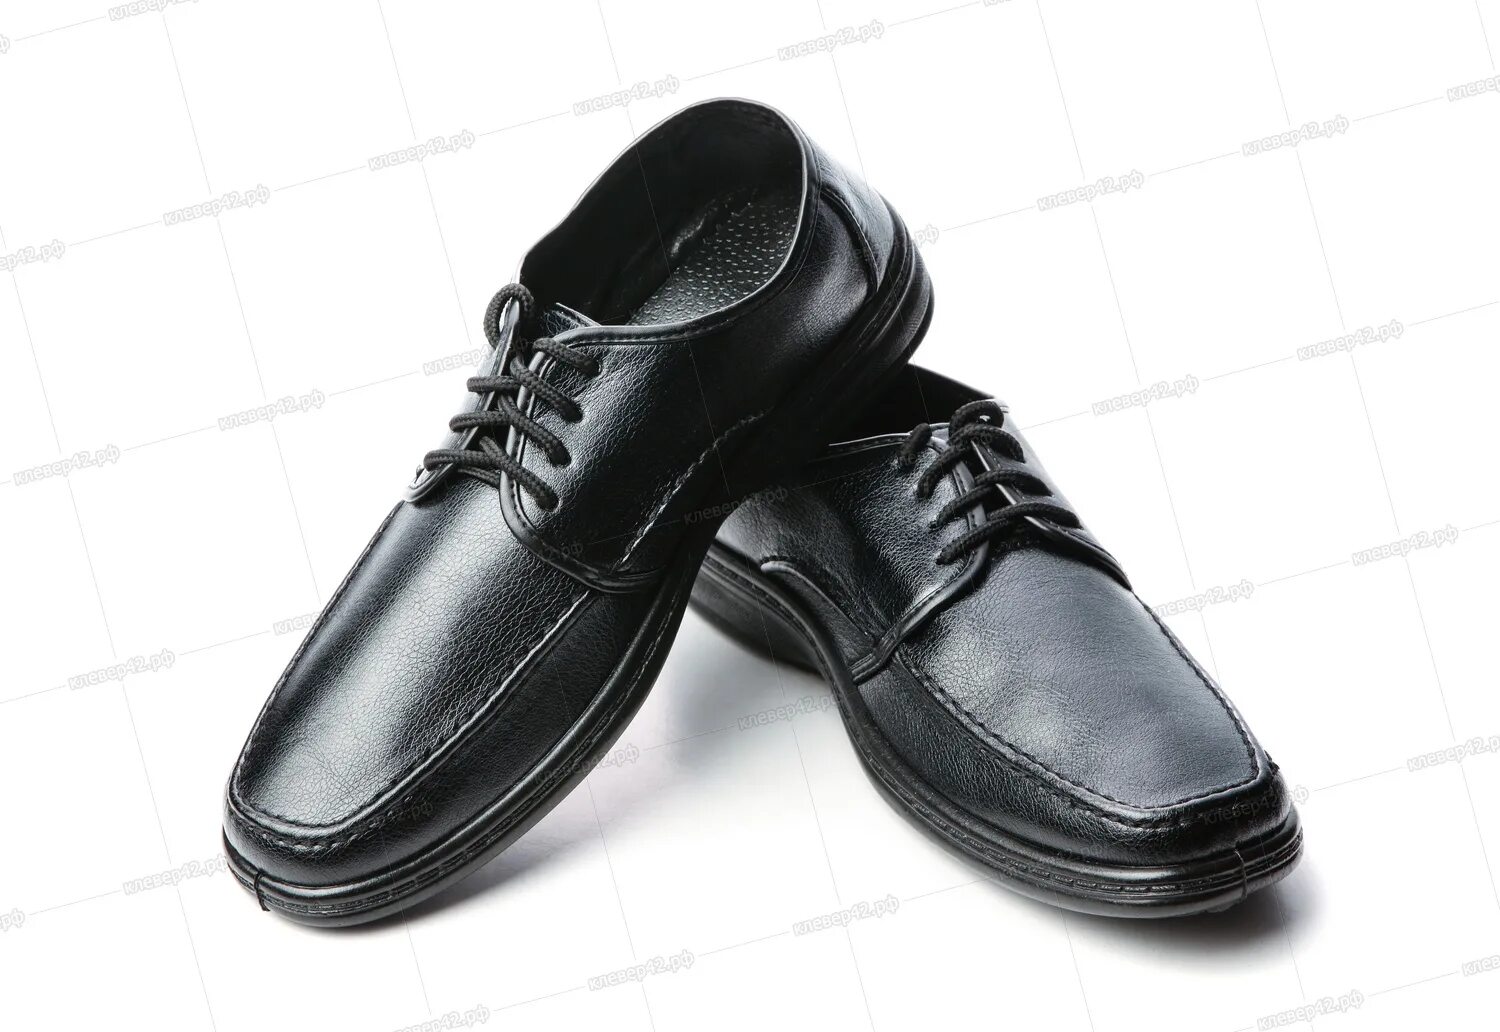 Мужские туфли 41 размера. Туфли со шнурками мужские. Похоронные туфли мужские. Чёрные мужские туфли на шнурках. Похоронные ботинки.